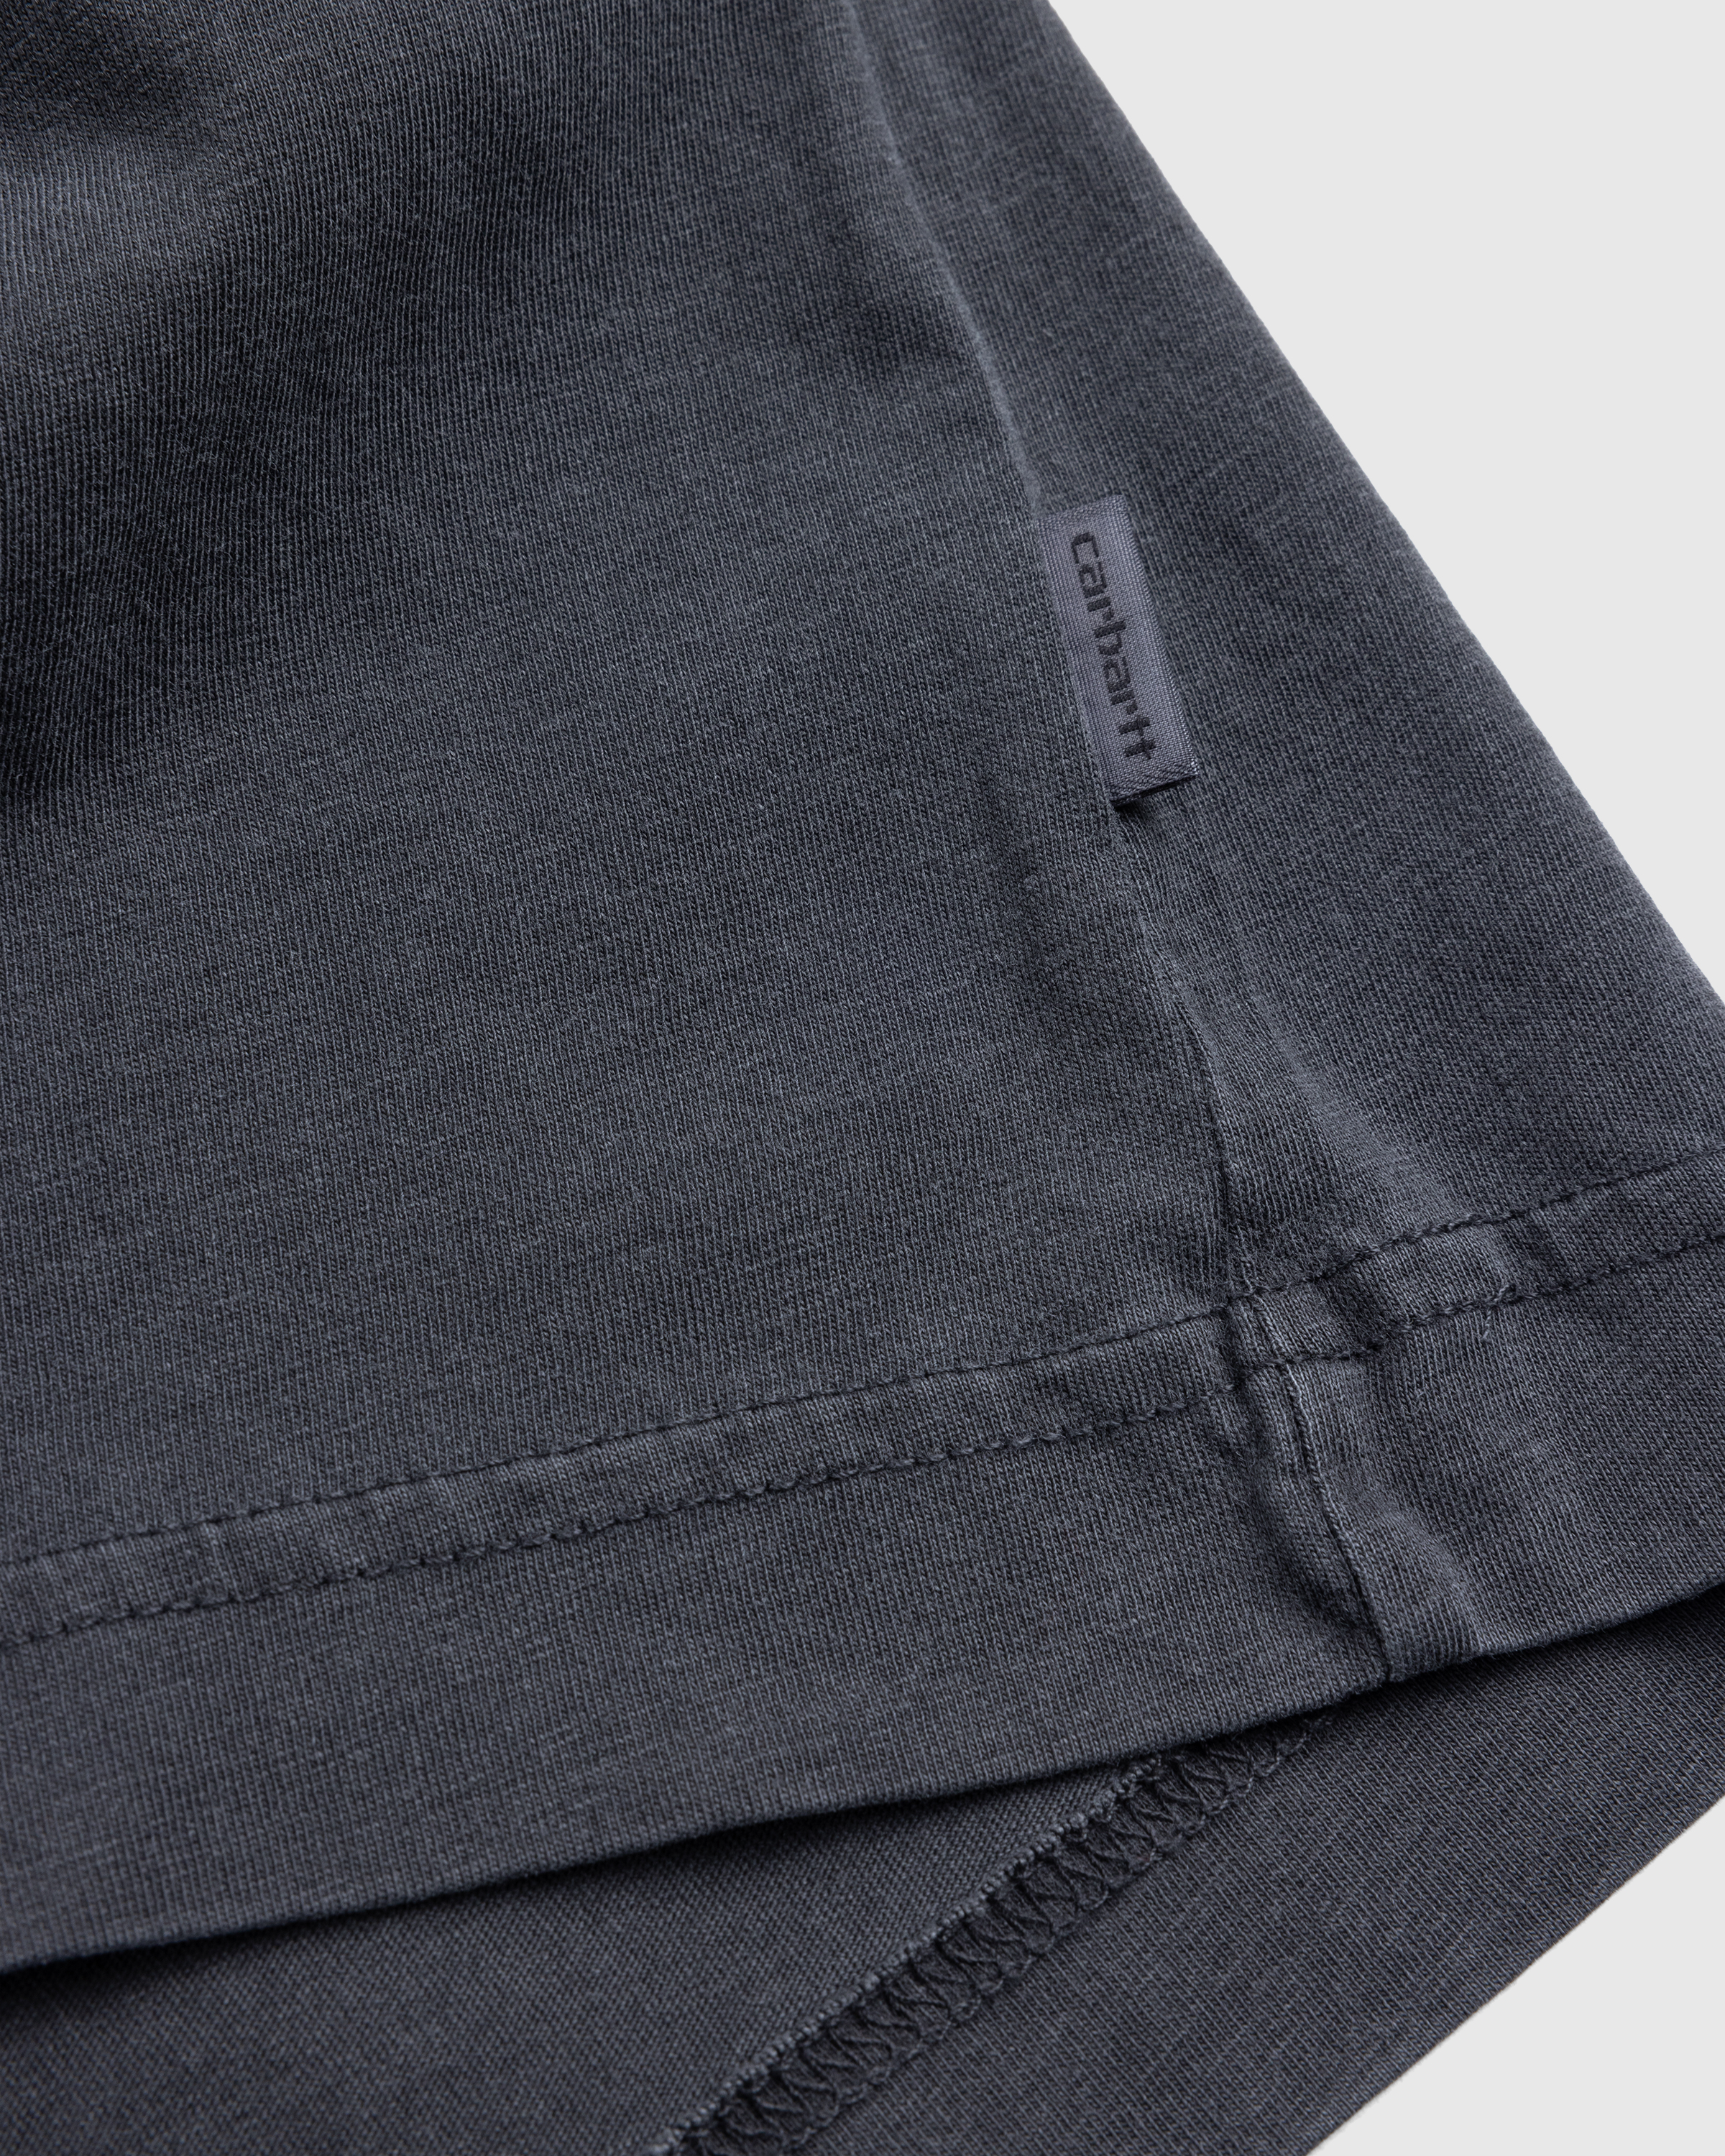 Carhartt WIP – Dune T-Shirt Charcoal/Garment Dyed - Tops - Grey - Image 6